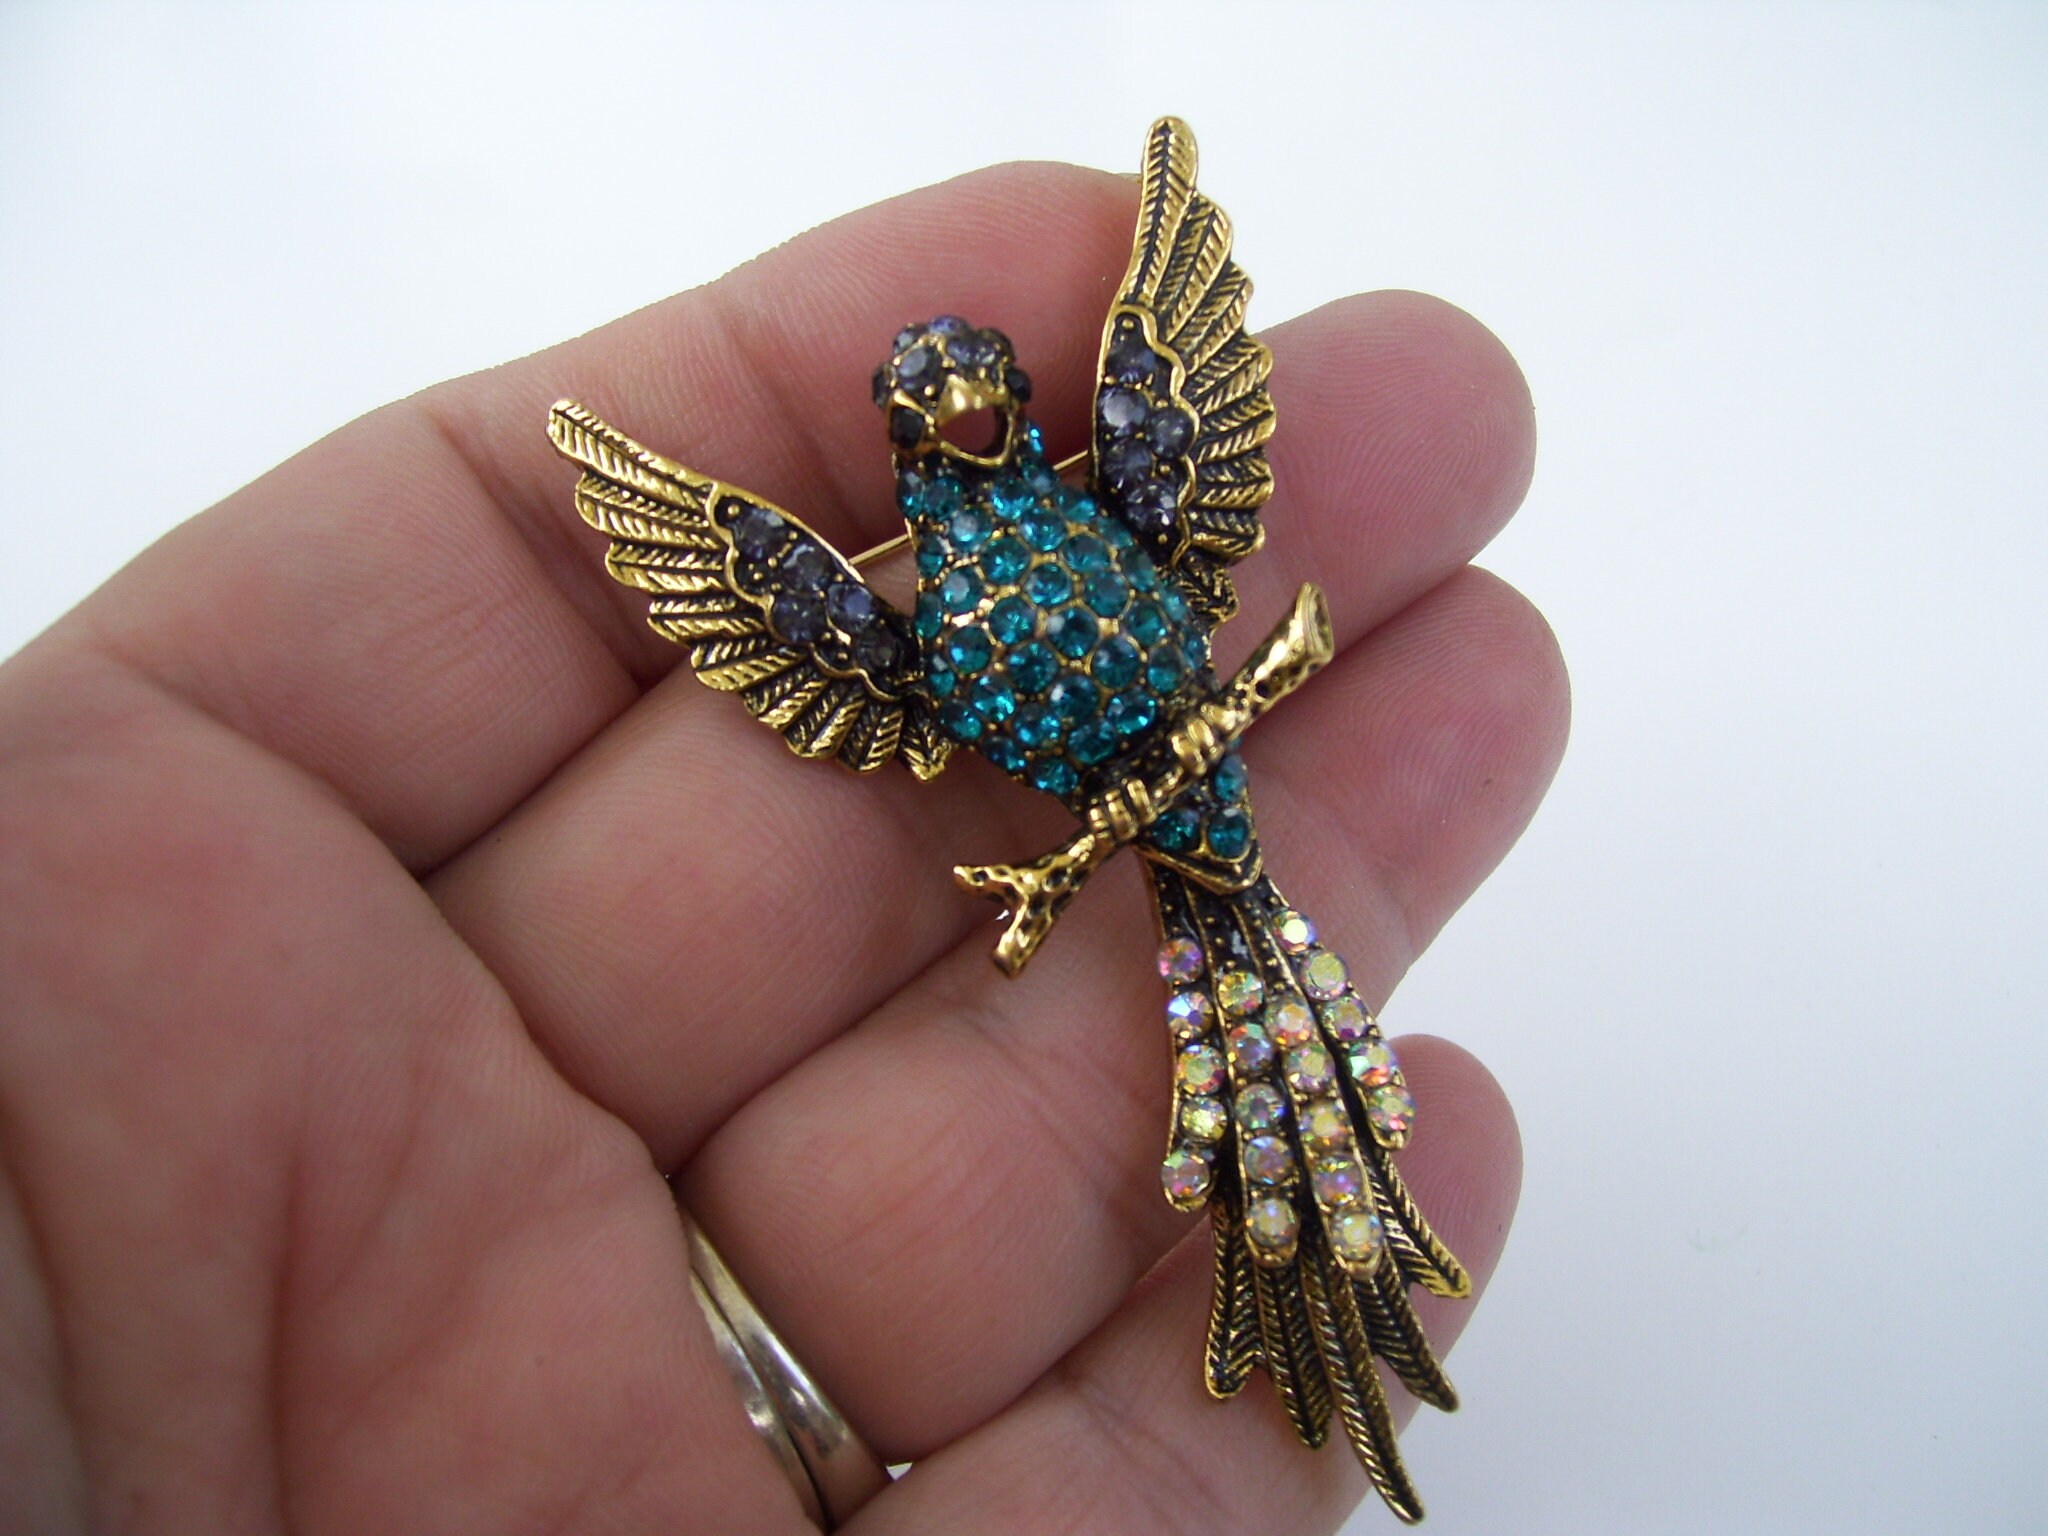 Hummingbird Brooch Pins For Women Fashion Bird Pins Elegant Rhinestone